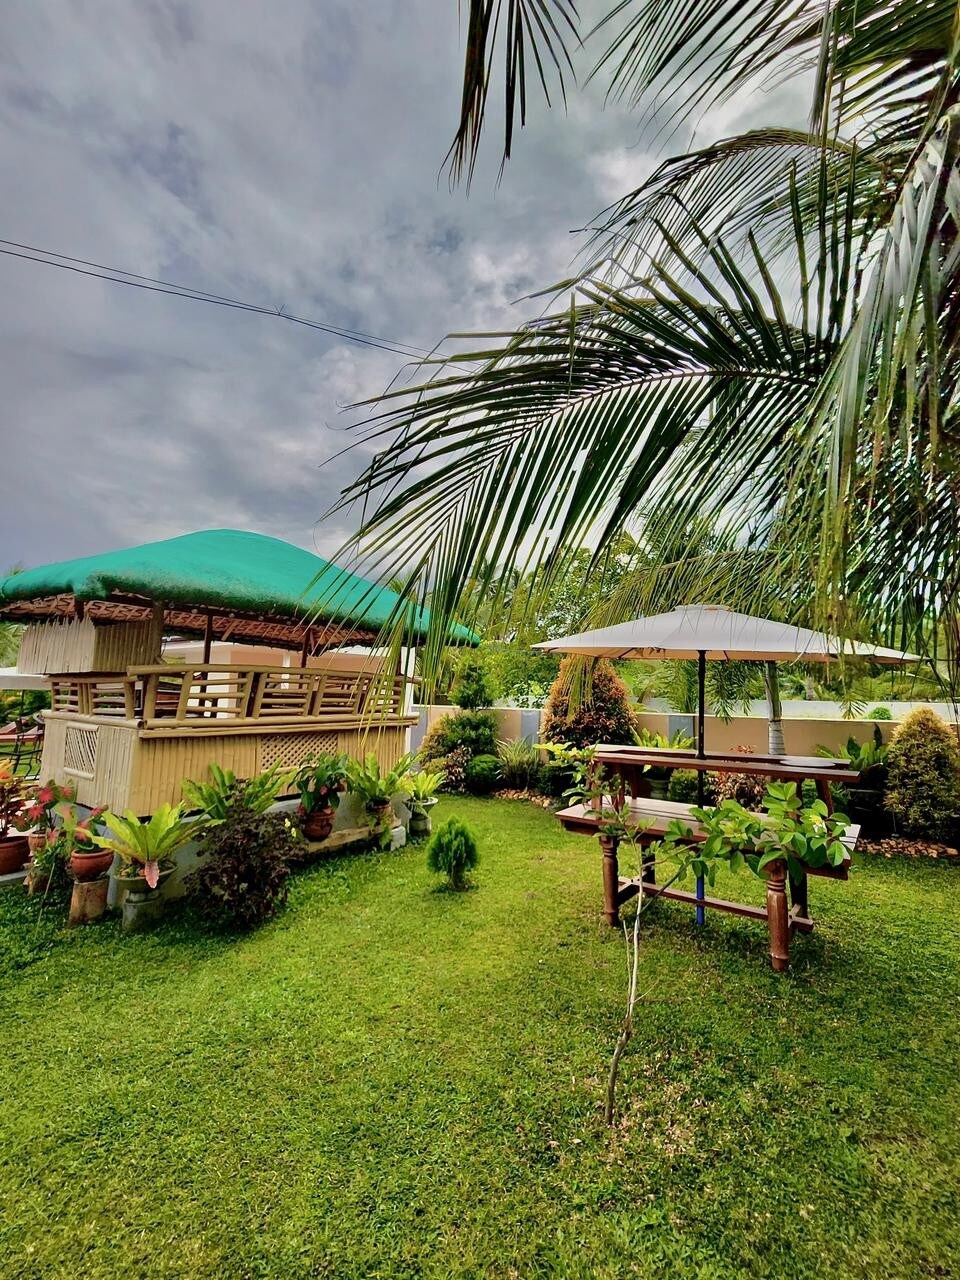 Casa Isabel Private Resort - Sariaya Quezon